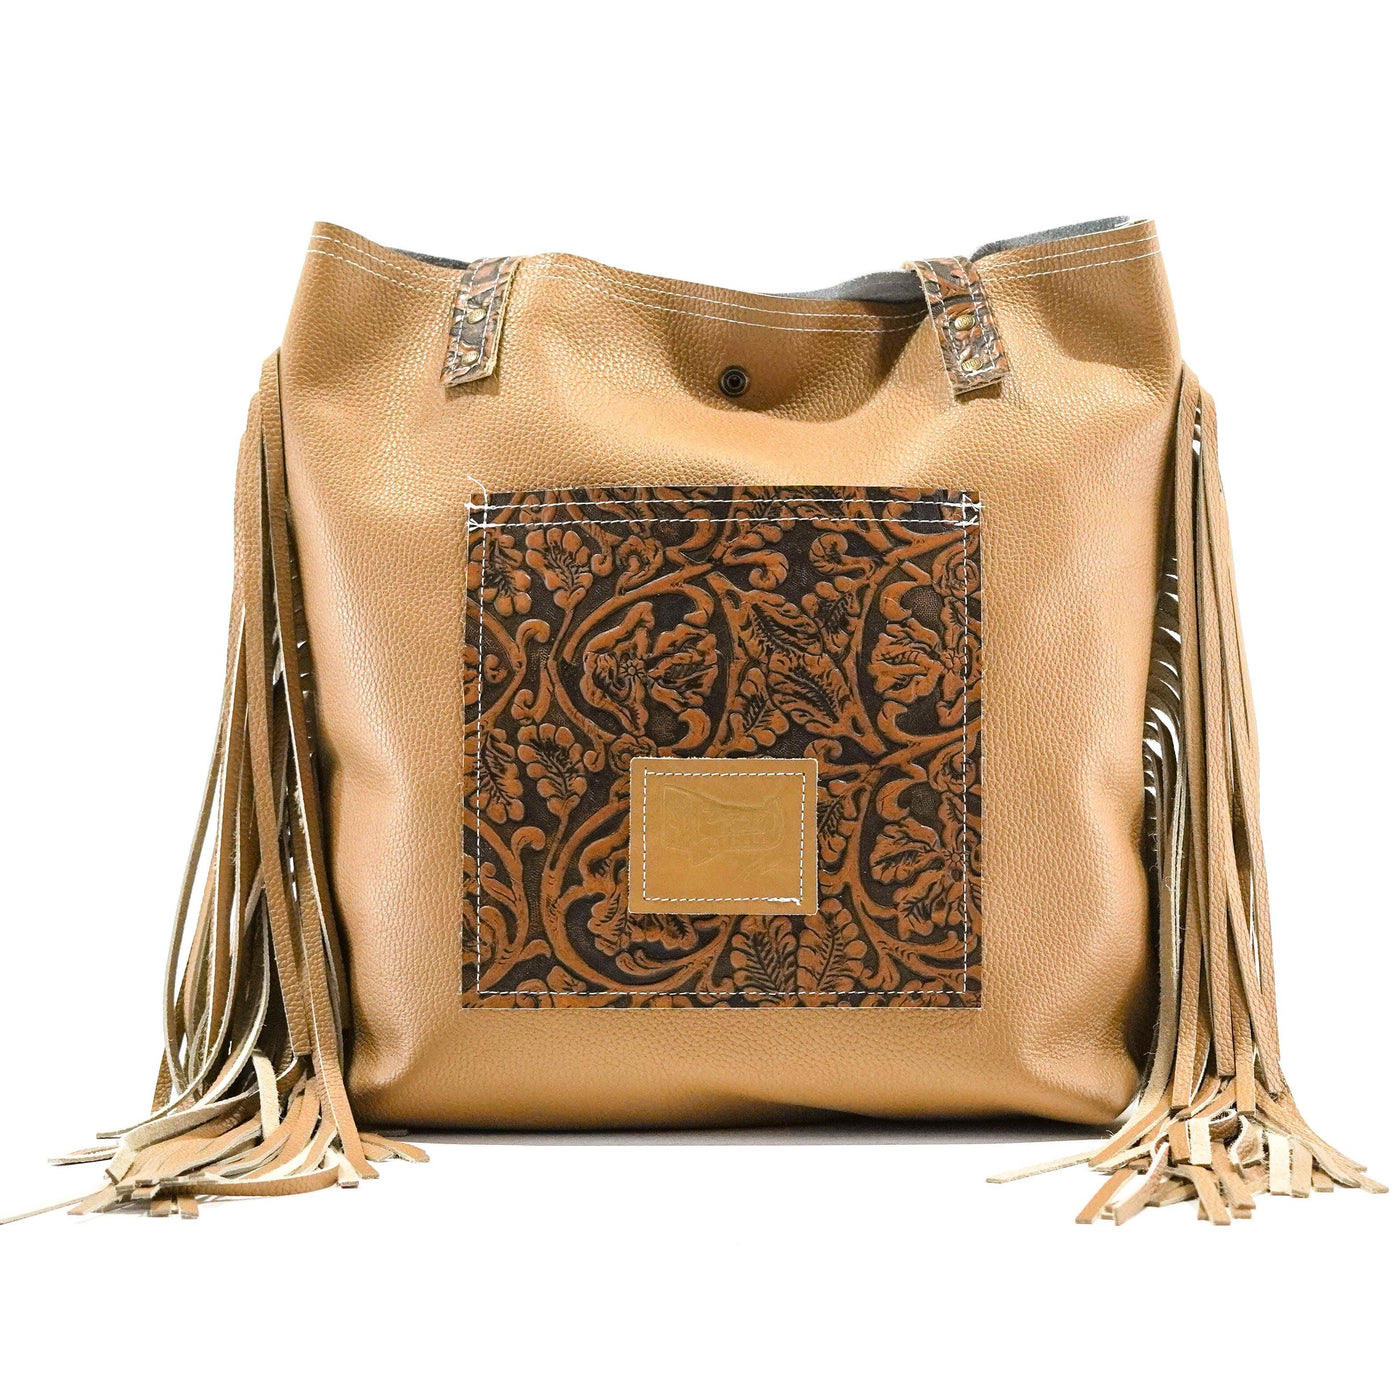 Trisha - Longhorn w/ Honey Tool-Trisha-Western-Cowhide-Bags-Handmade-Products-Gifts-Dancing Cactus Designs